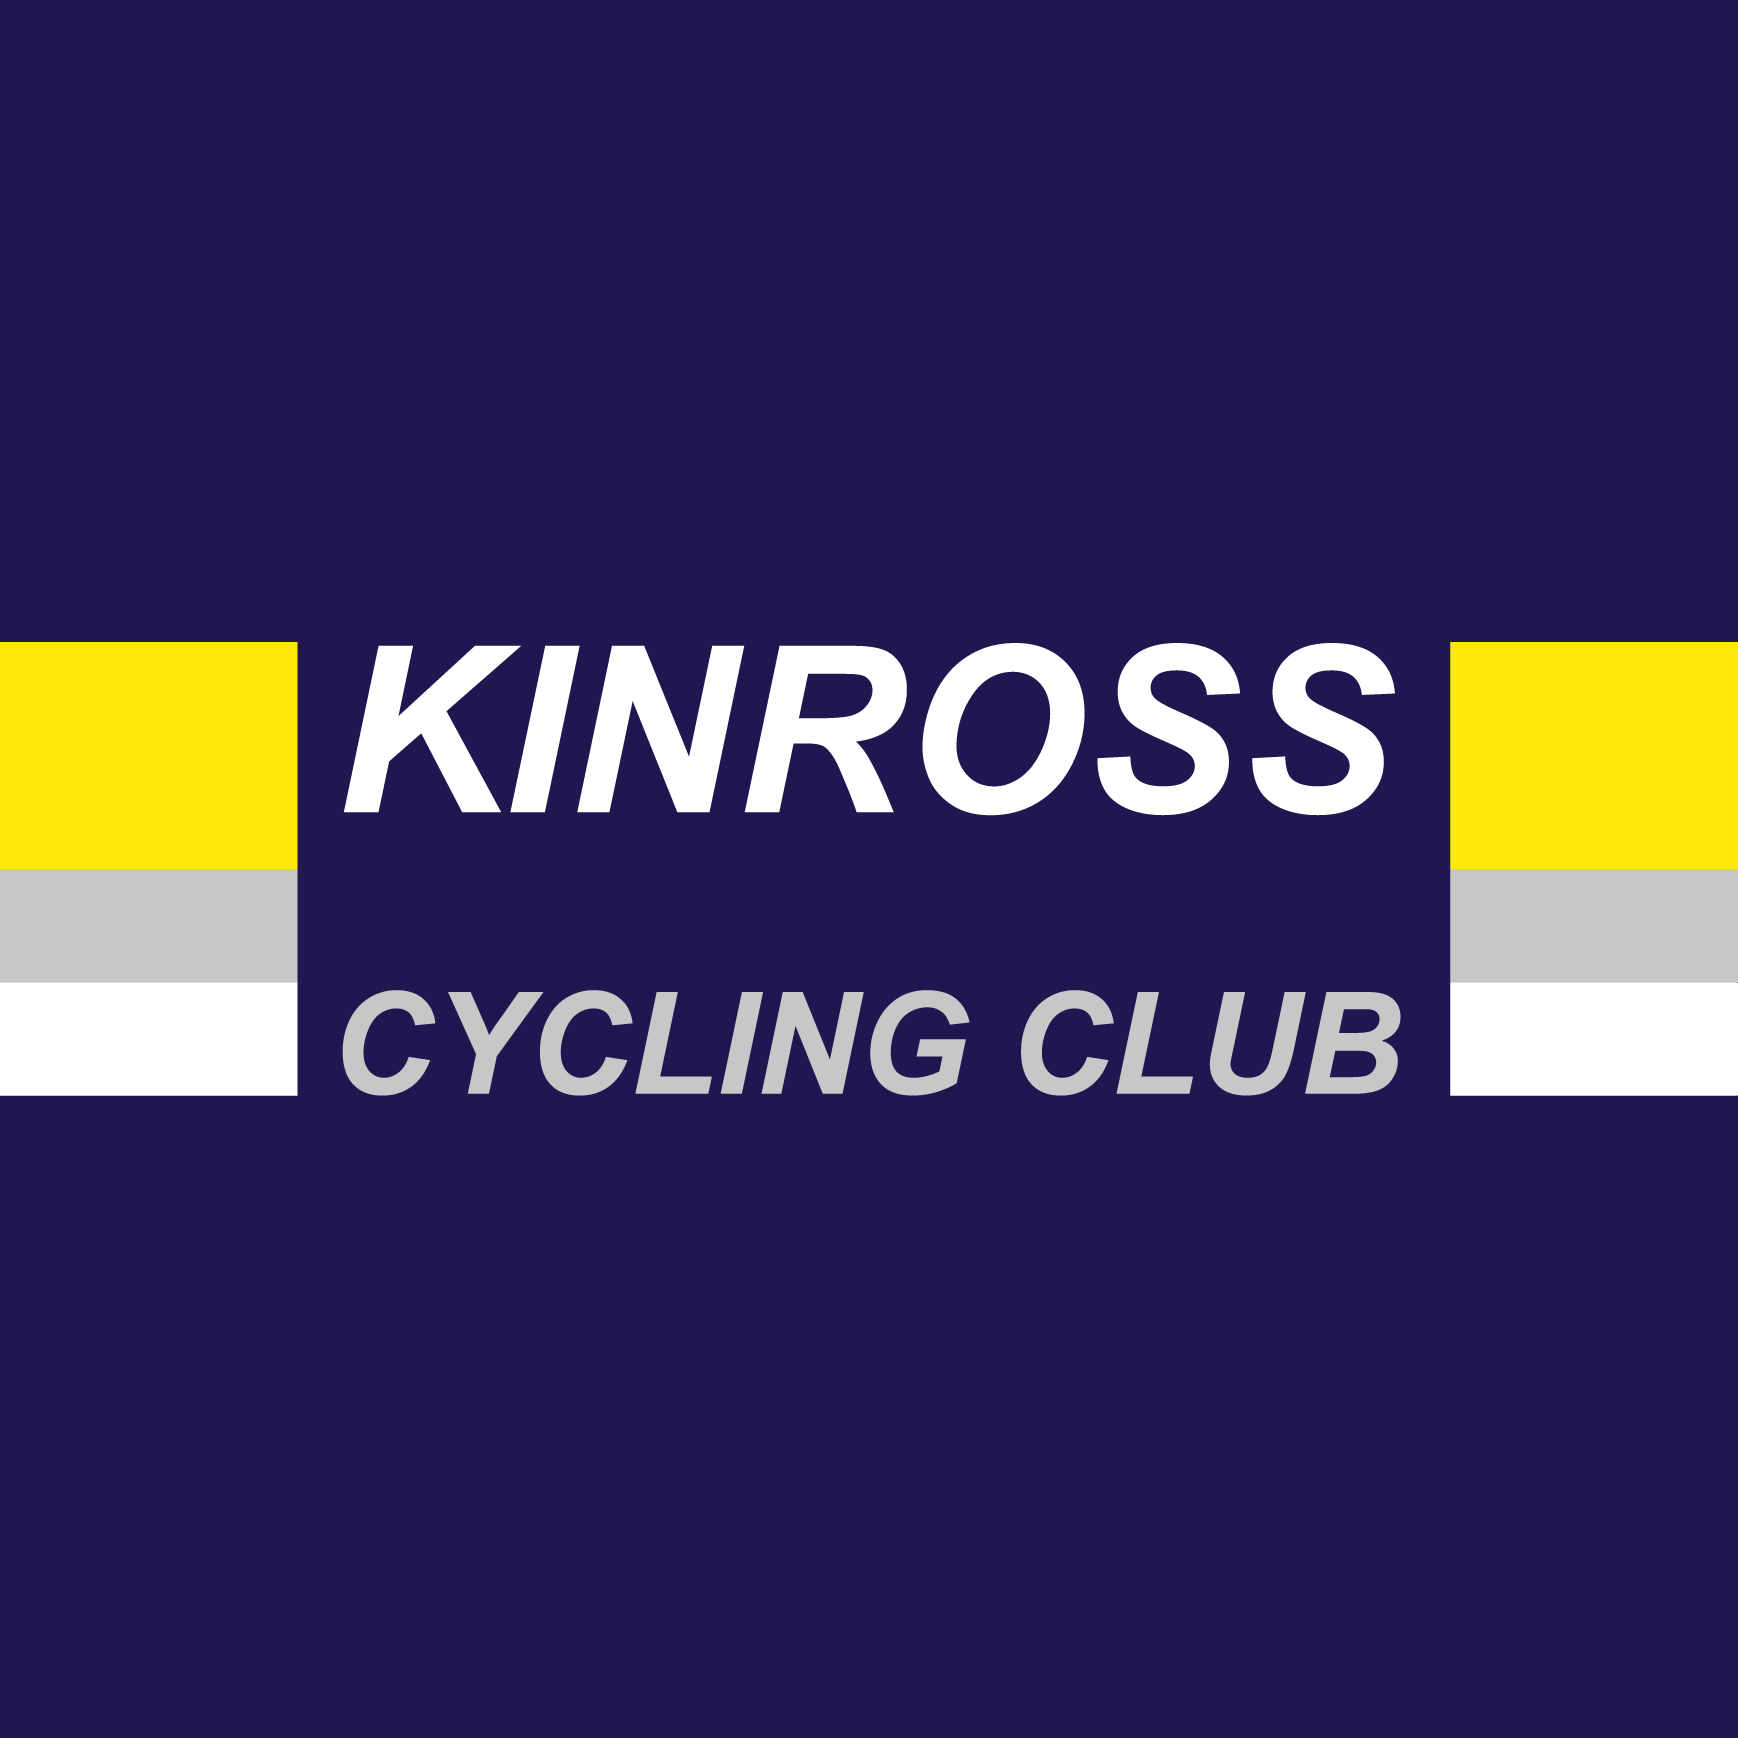 Club Image for KINROSS CC